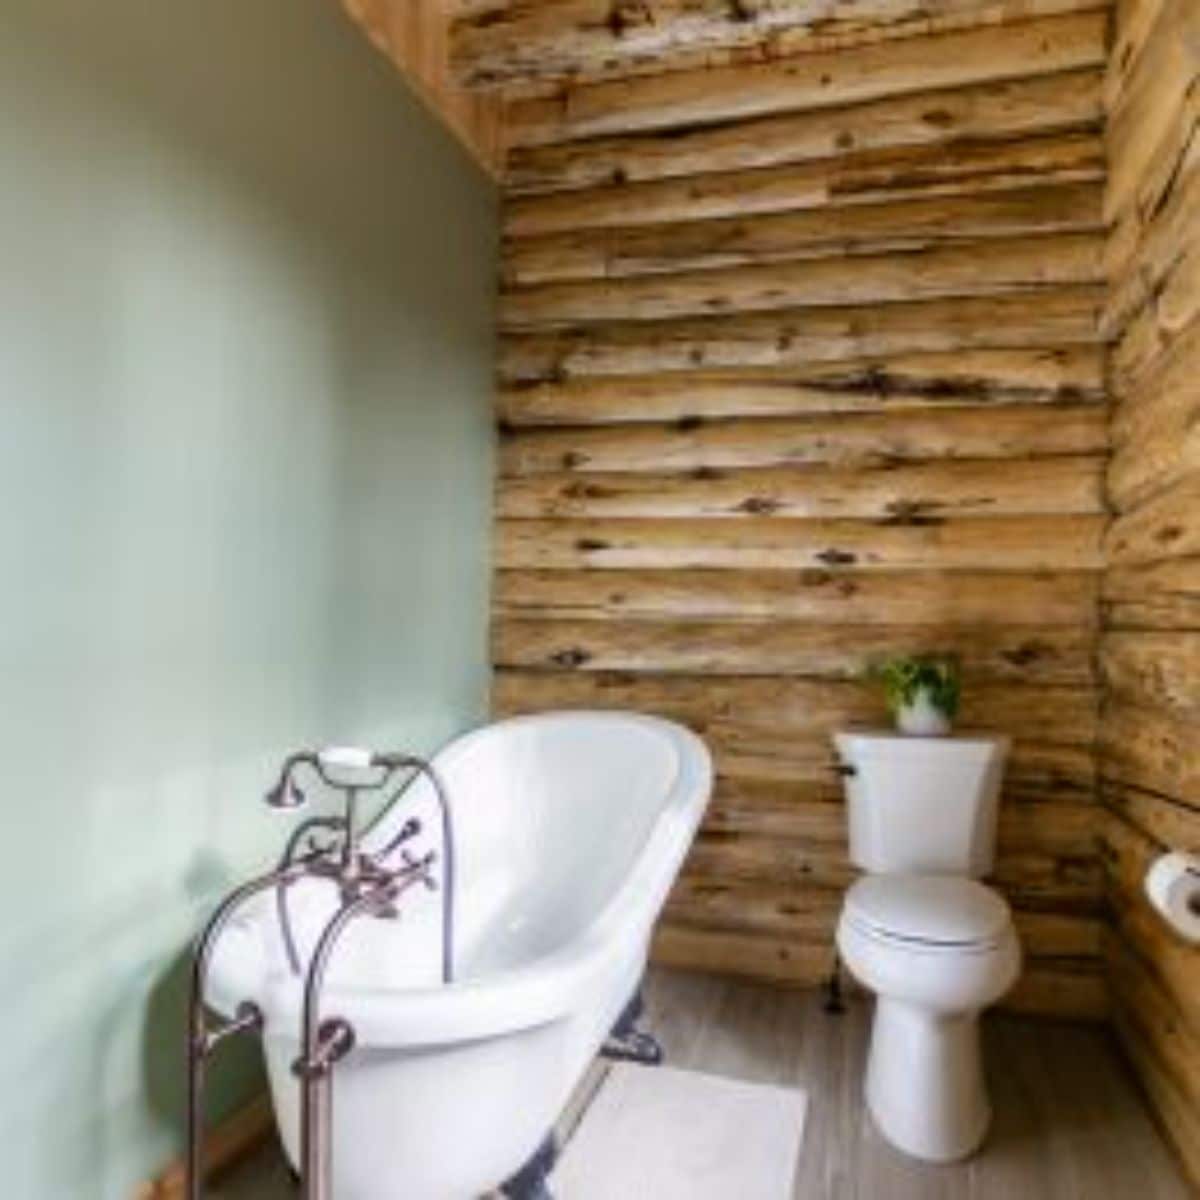 white clawfoot bathtub next to green wall and white toilet